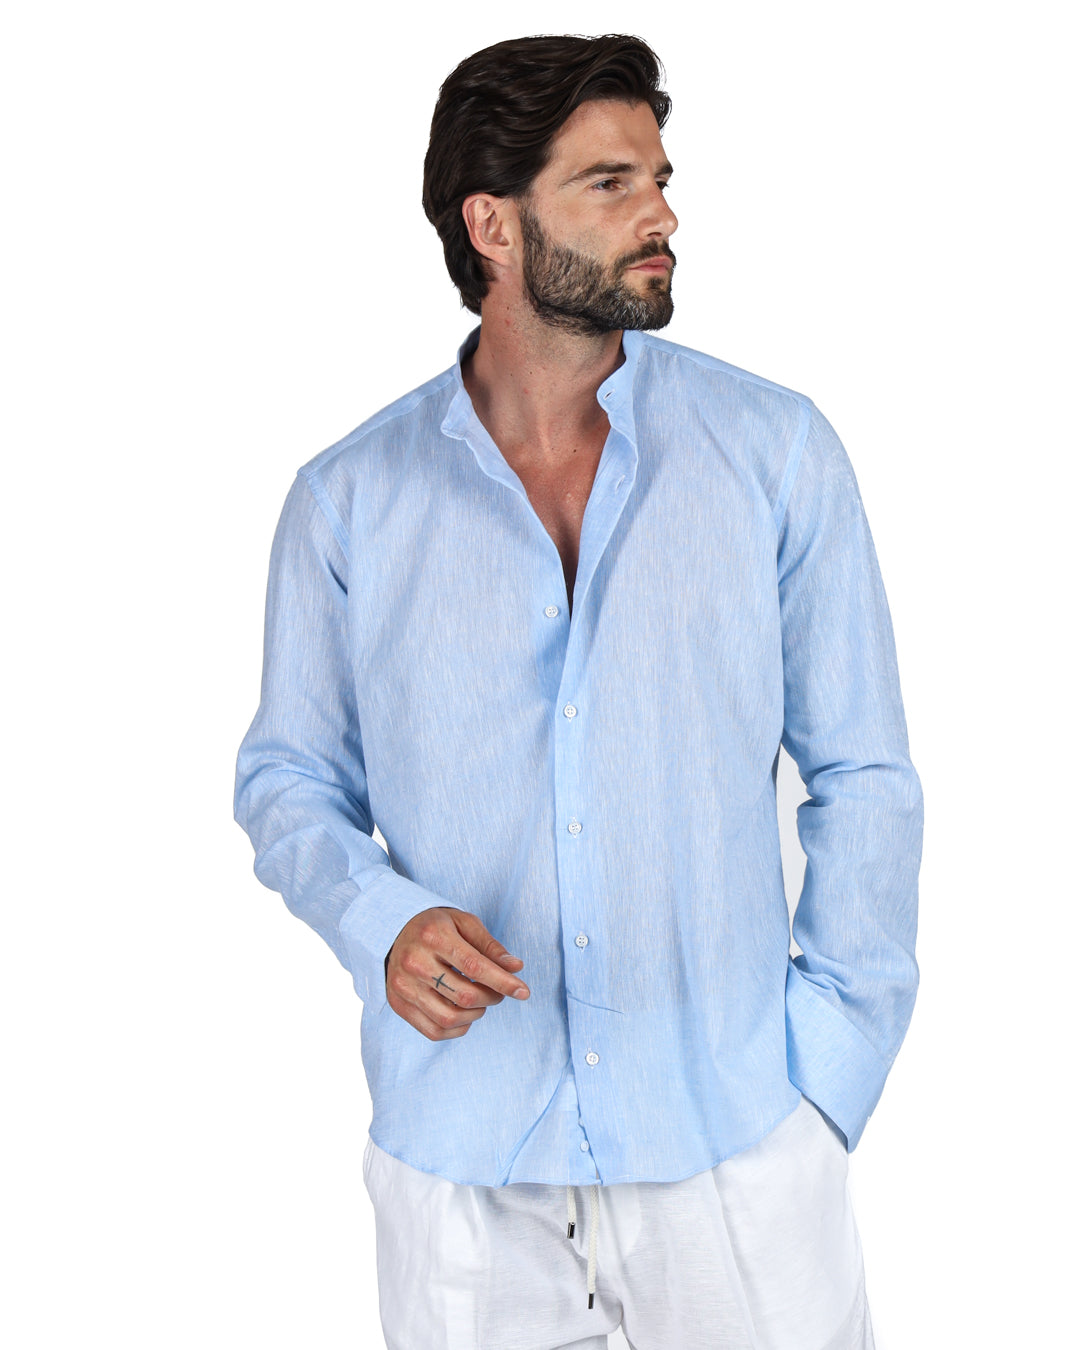 Positano - Light blue Korean linen shirt